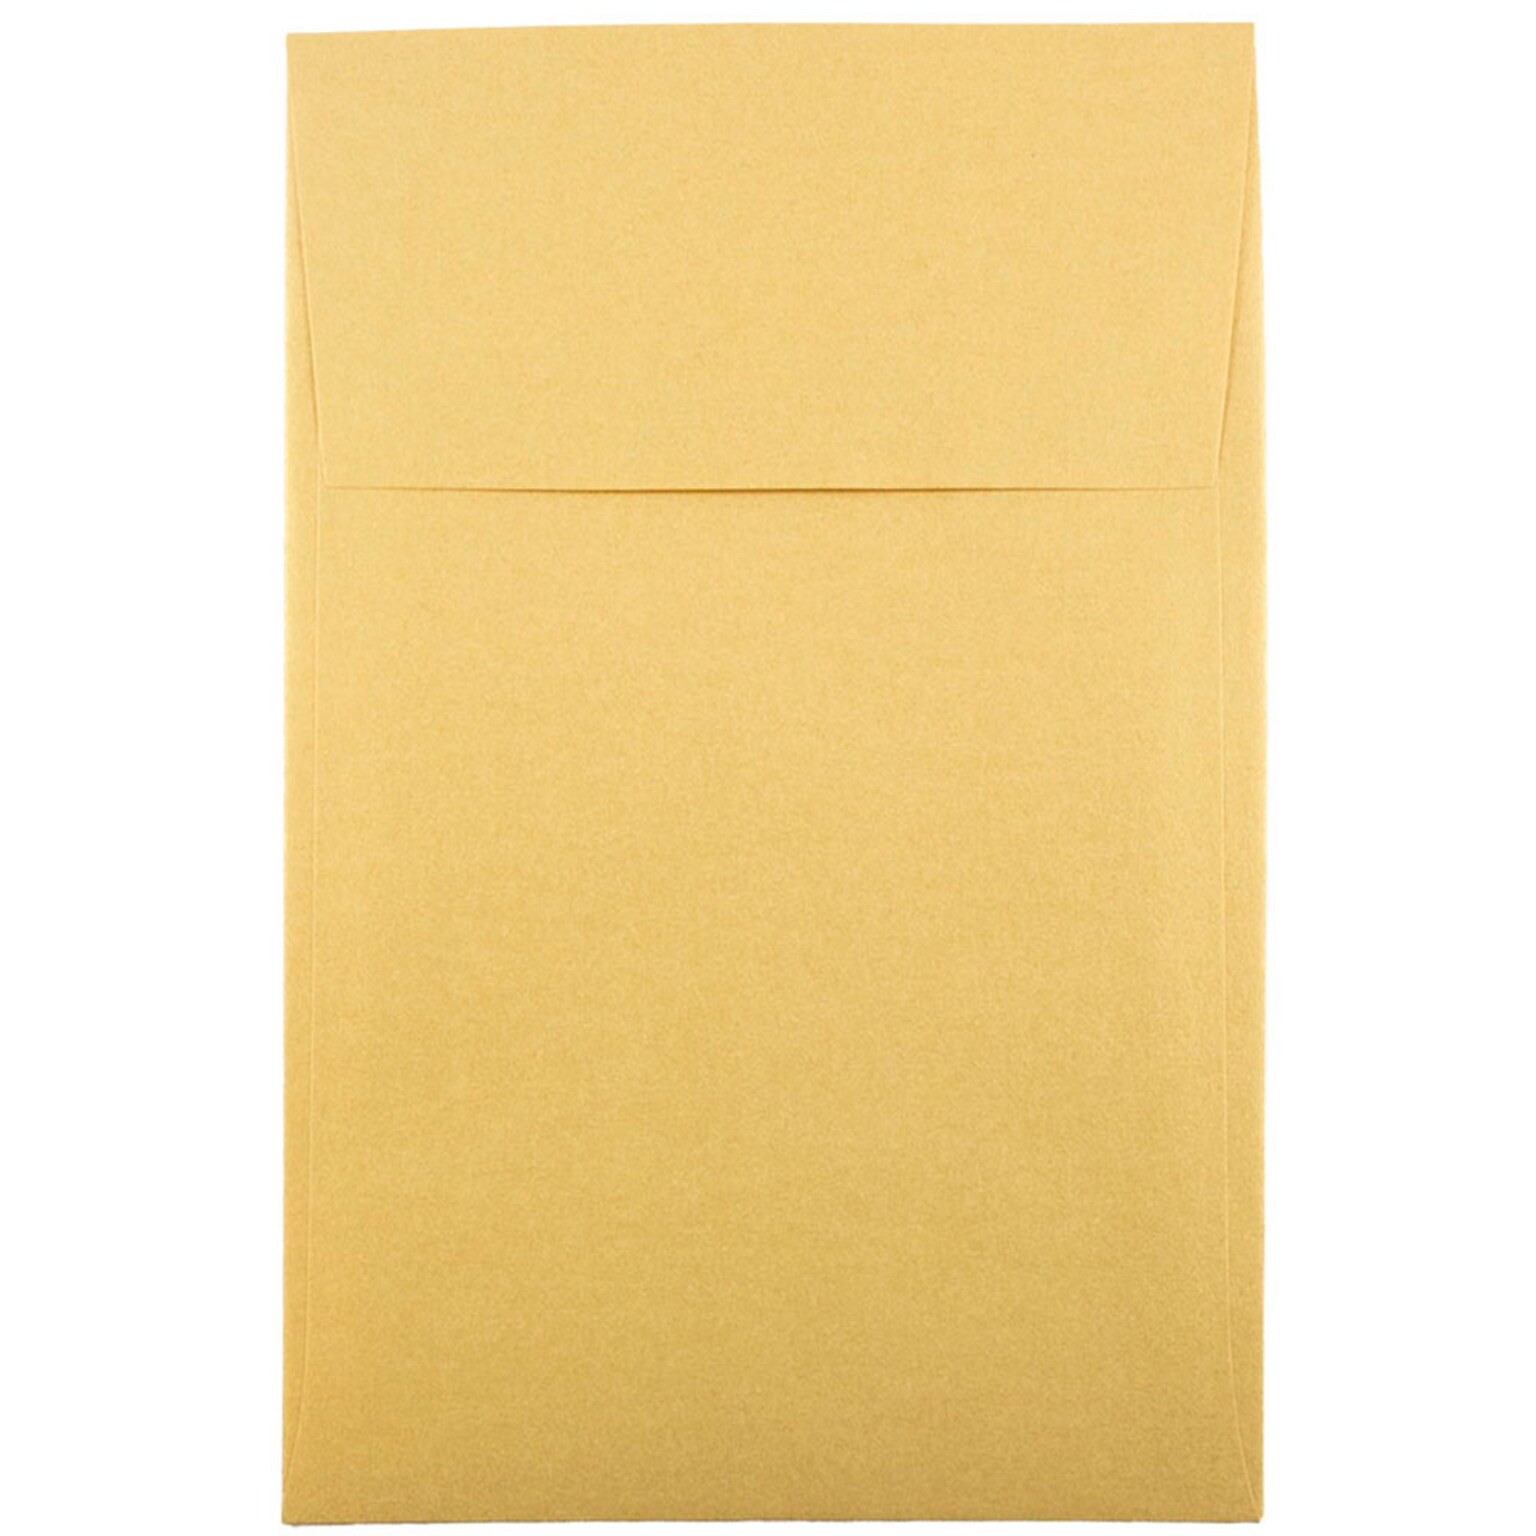 JAM Paper® A10 Policy Metallic Invitation Envelopes, 6 x 9.5, Stardream Gold, 25/Pack (V018304)